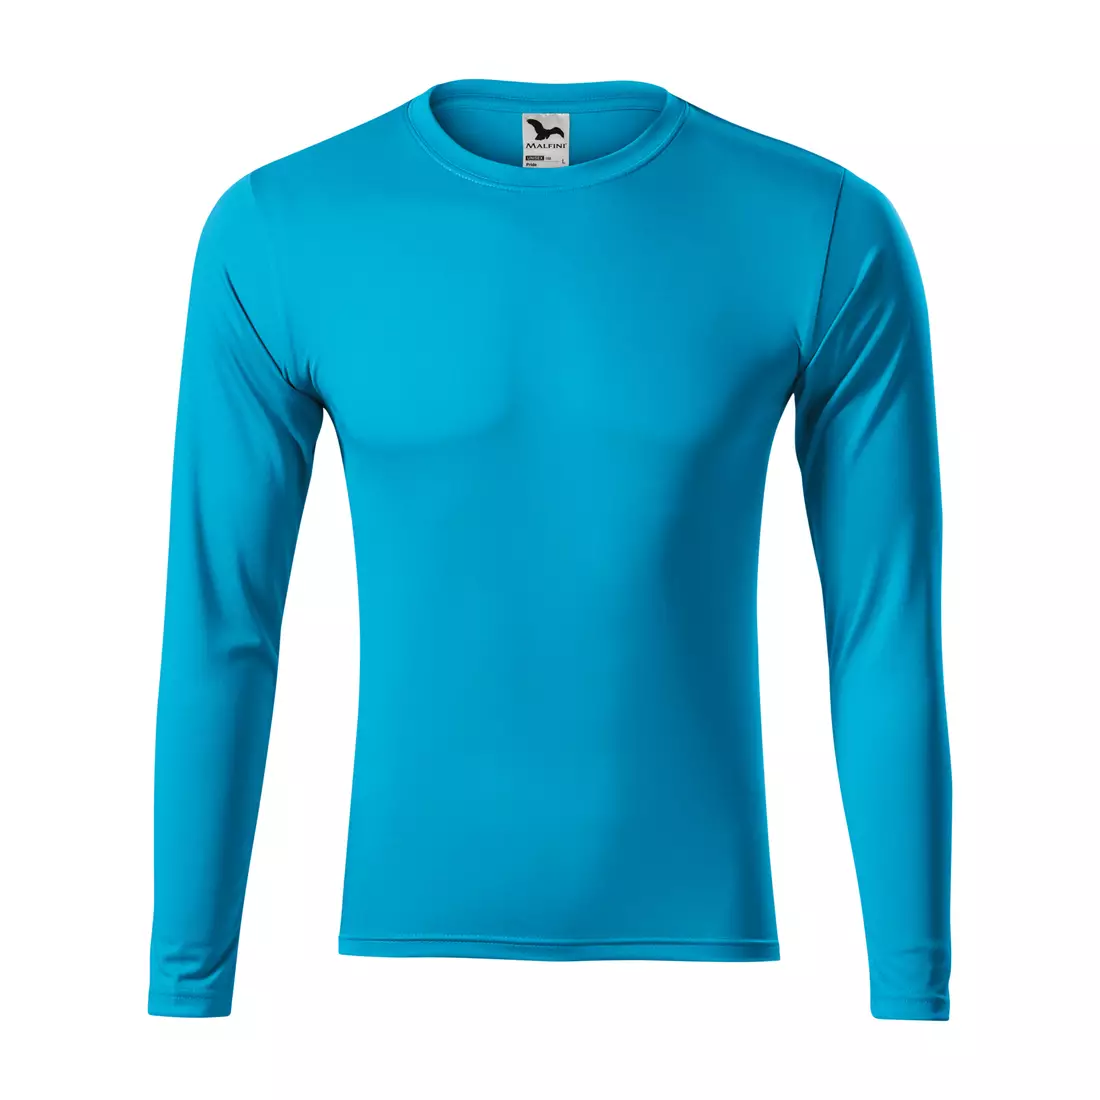 MALFINI PRIDE Men's Long Sleeve Sport Shirt, Turquoise 168441